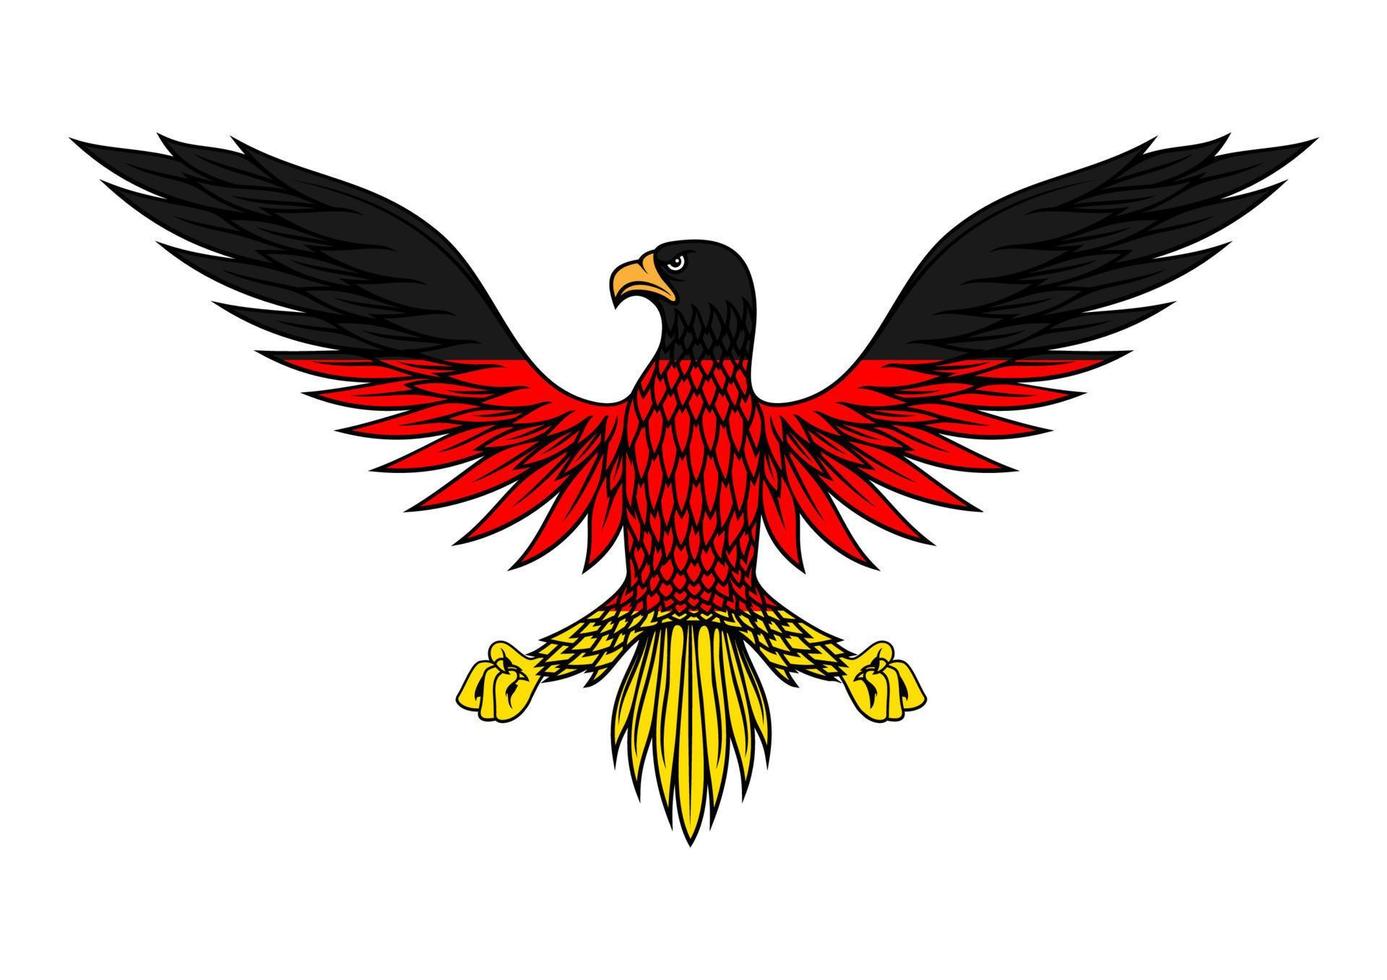 German eagle bird in flag colors vector